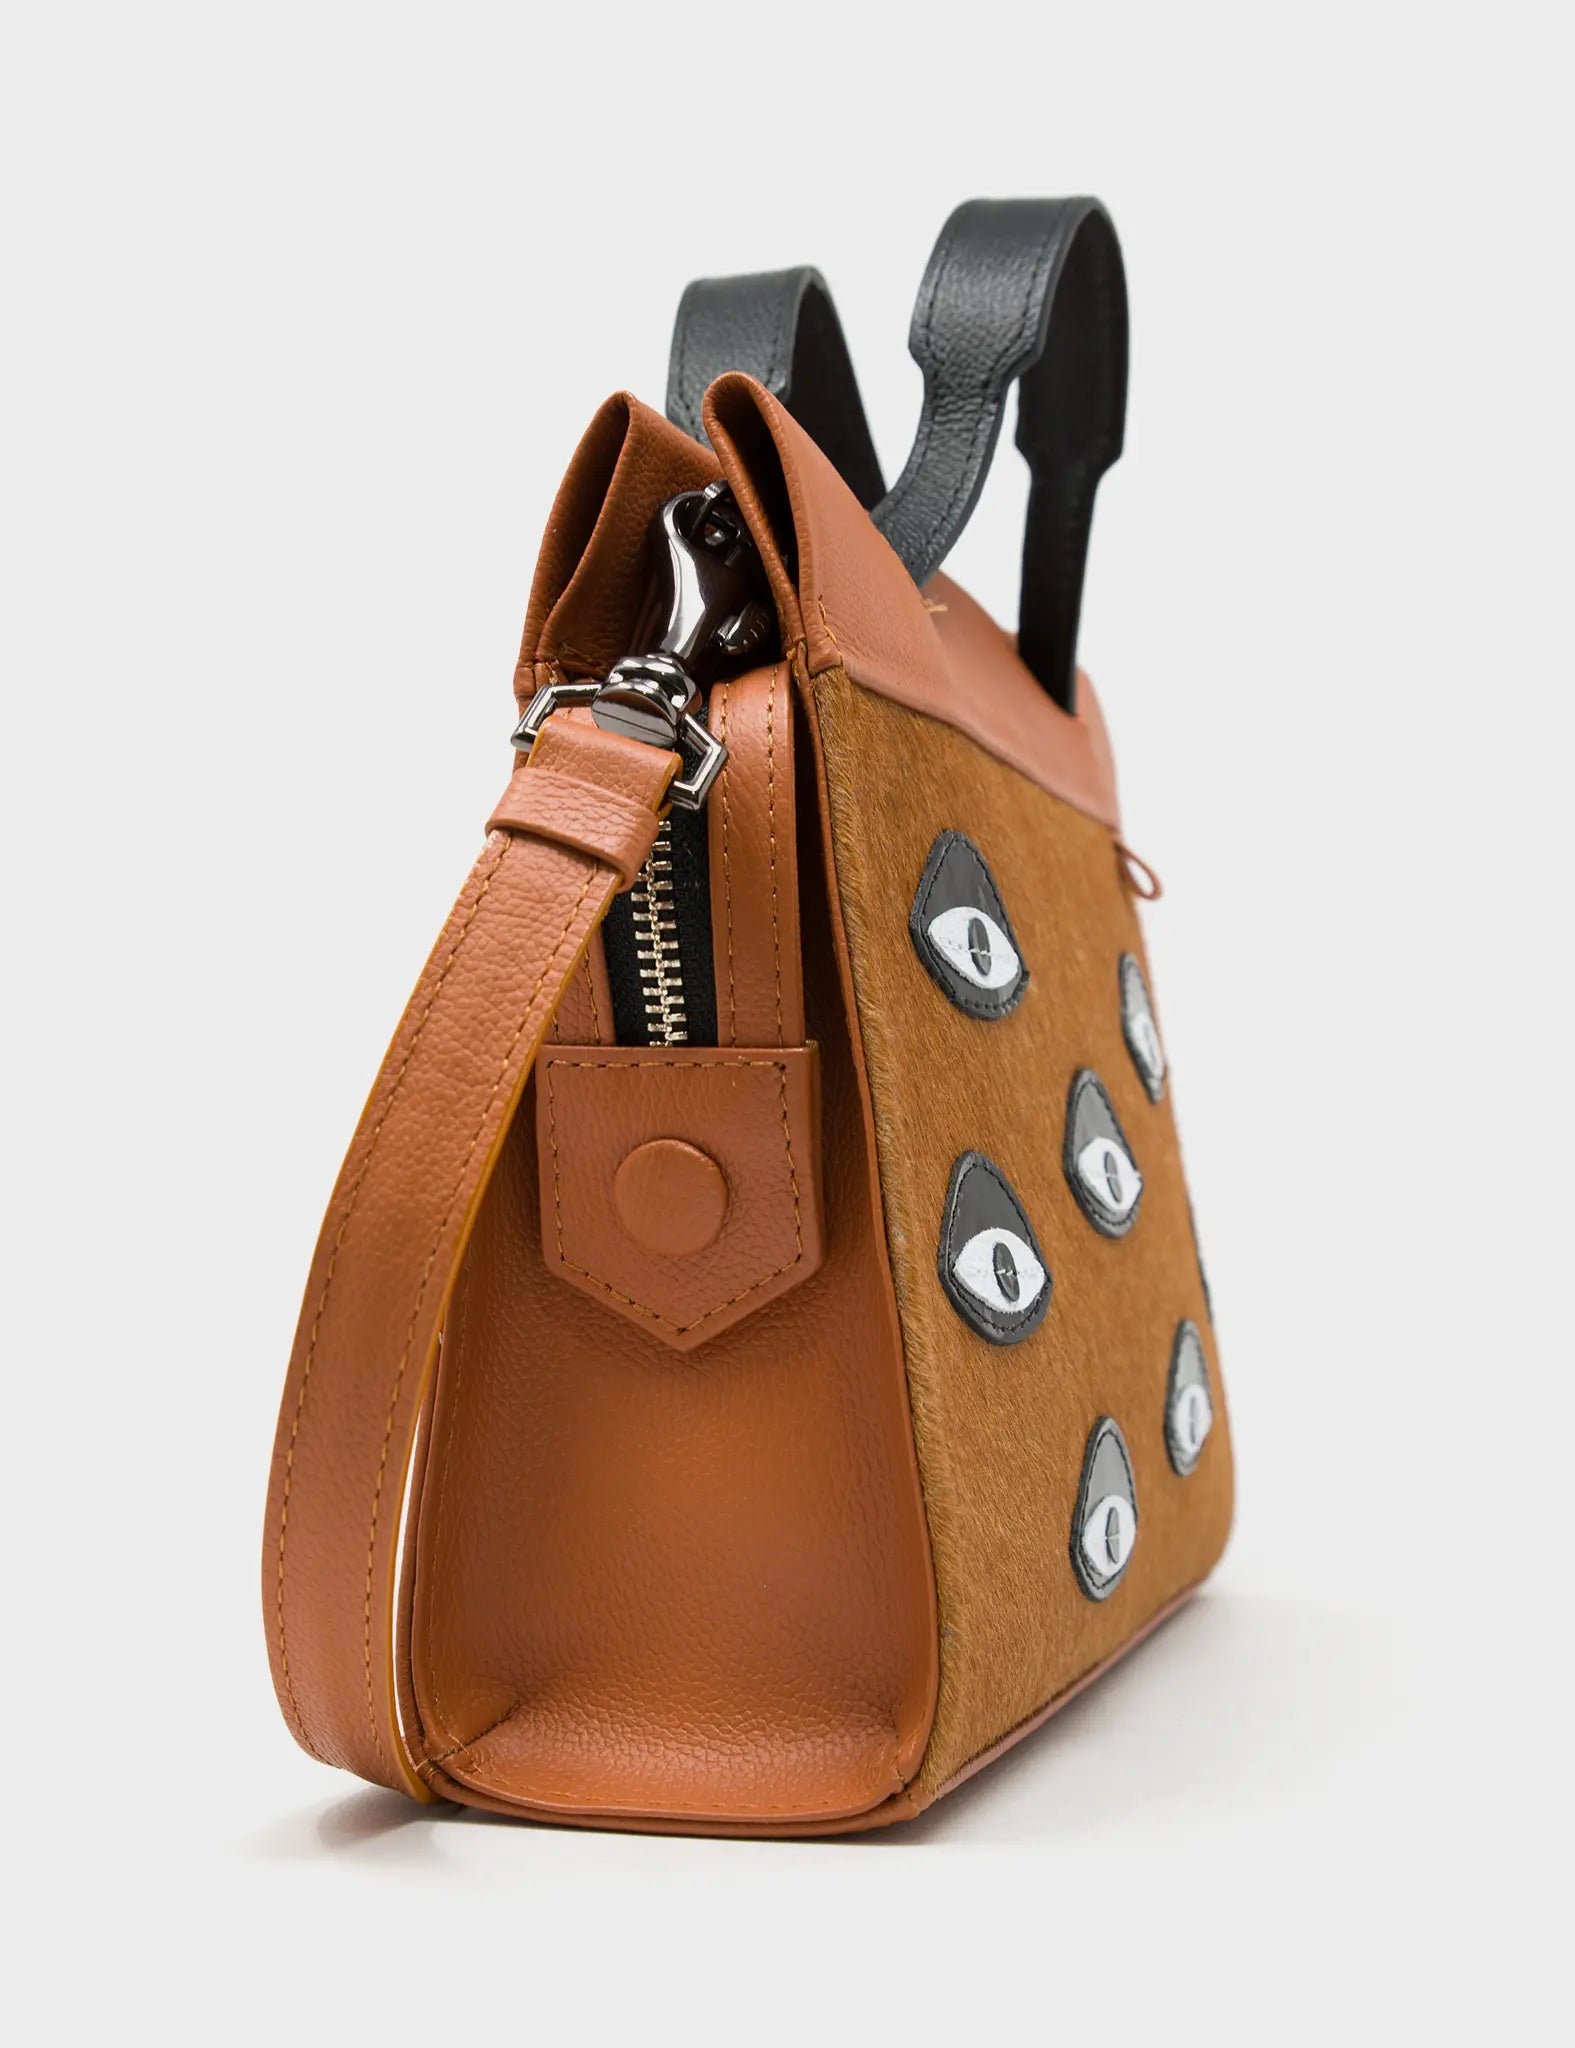 Vali Crossbody Small Caramel Leather Bag - Eyes Applique Adjustable Handle - Side view